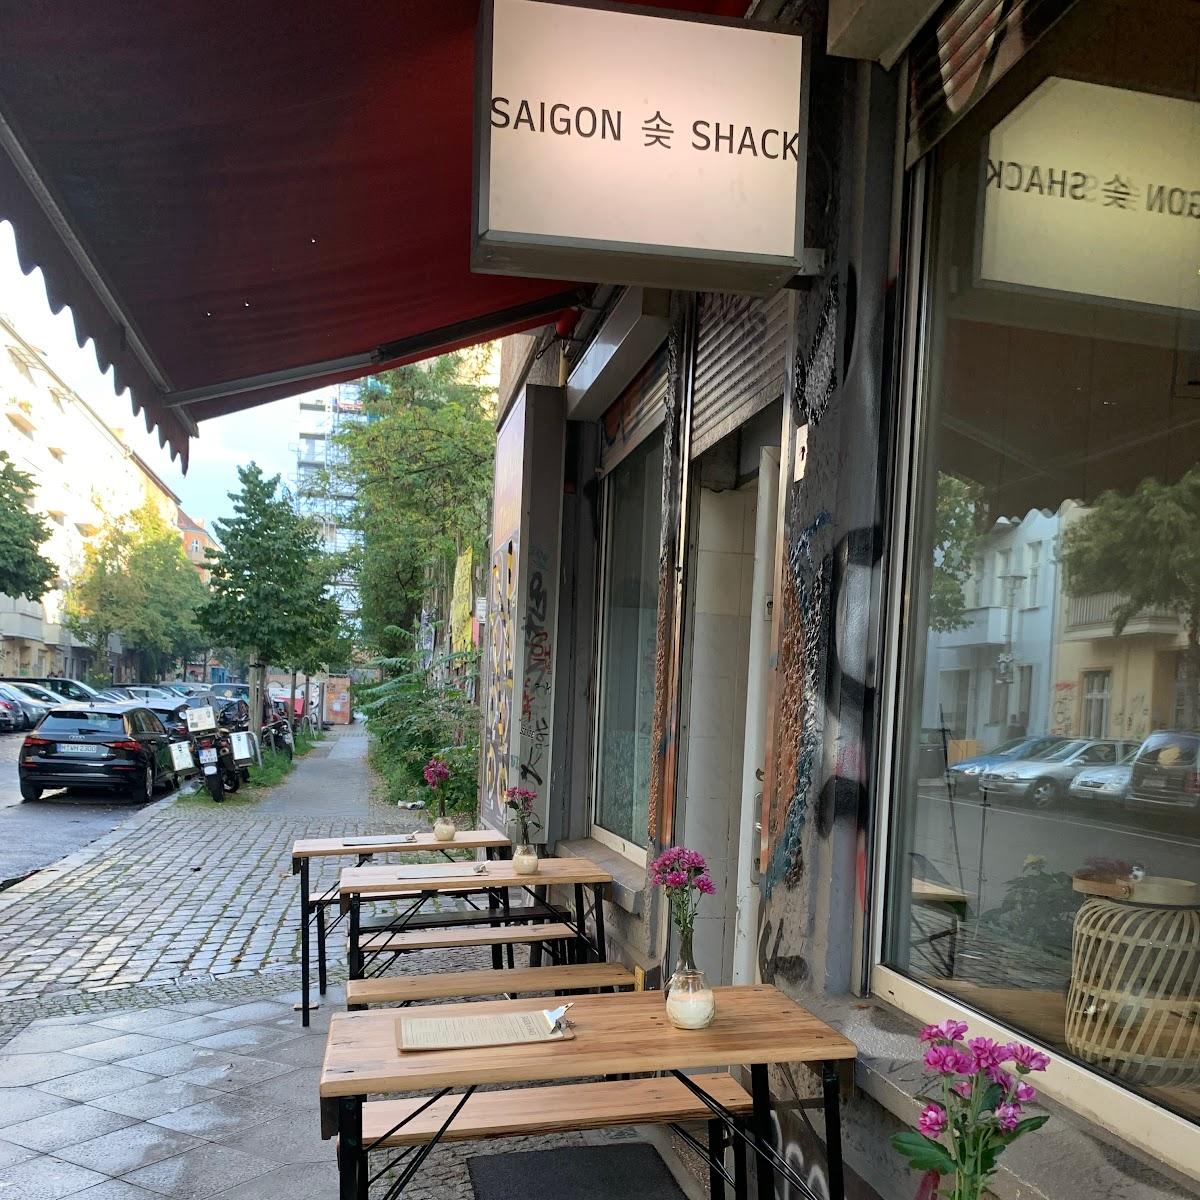 Restaurant "Saigon Shack" in Berlin